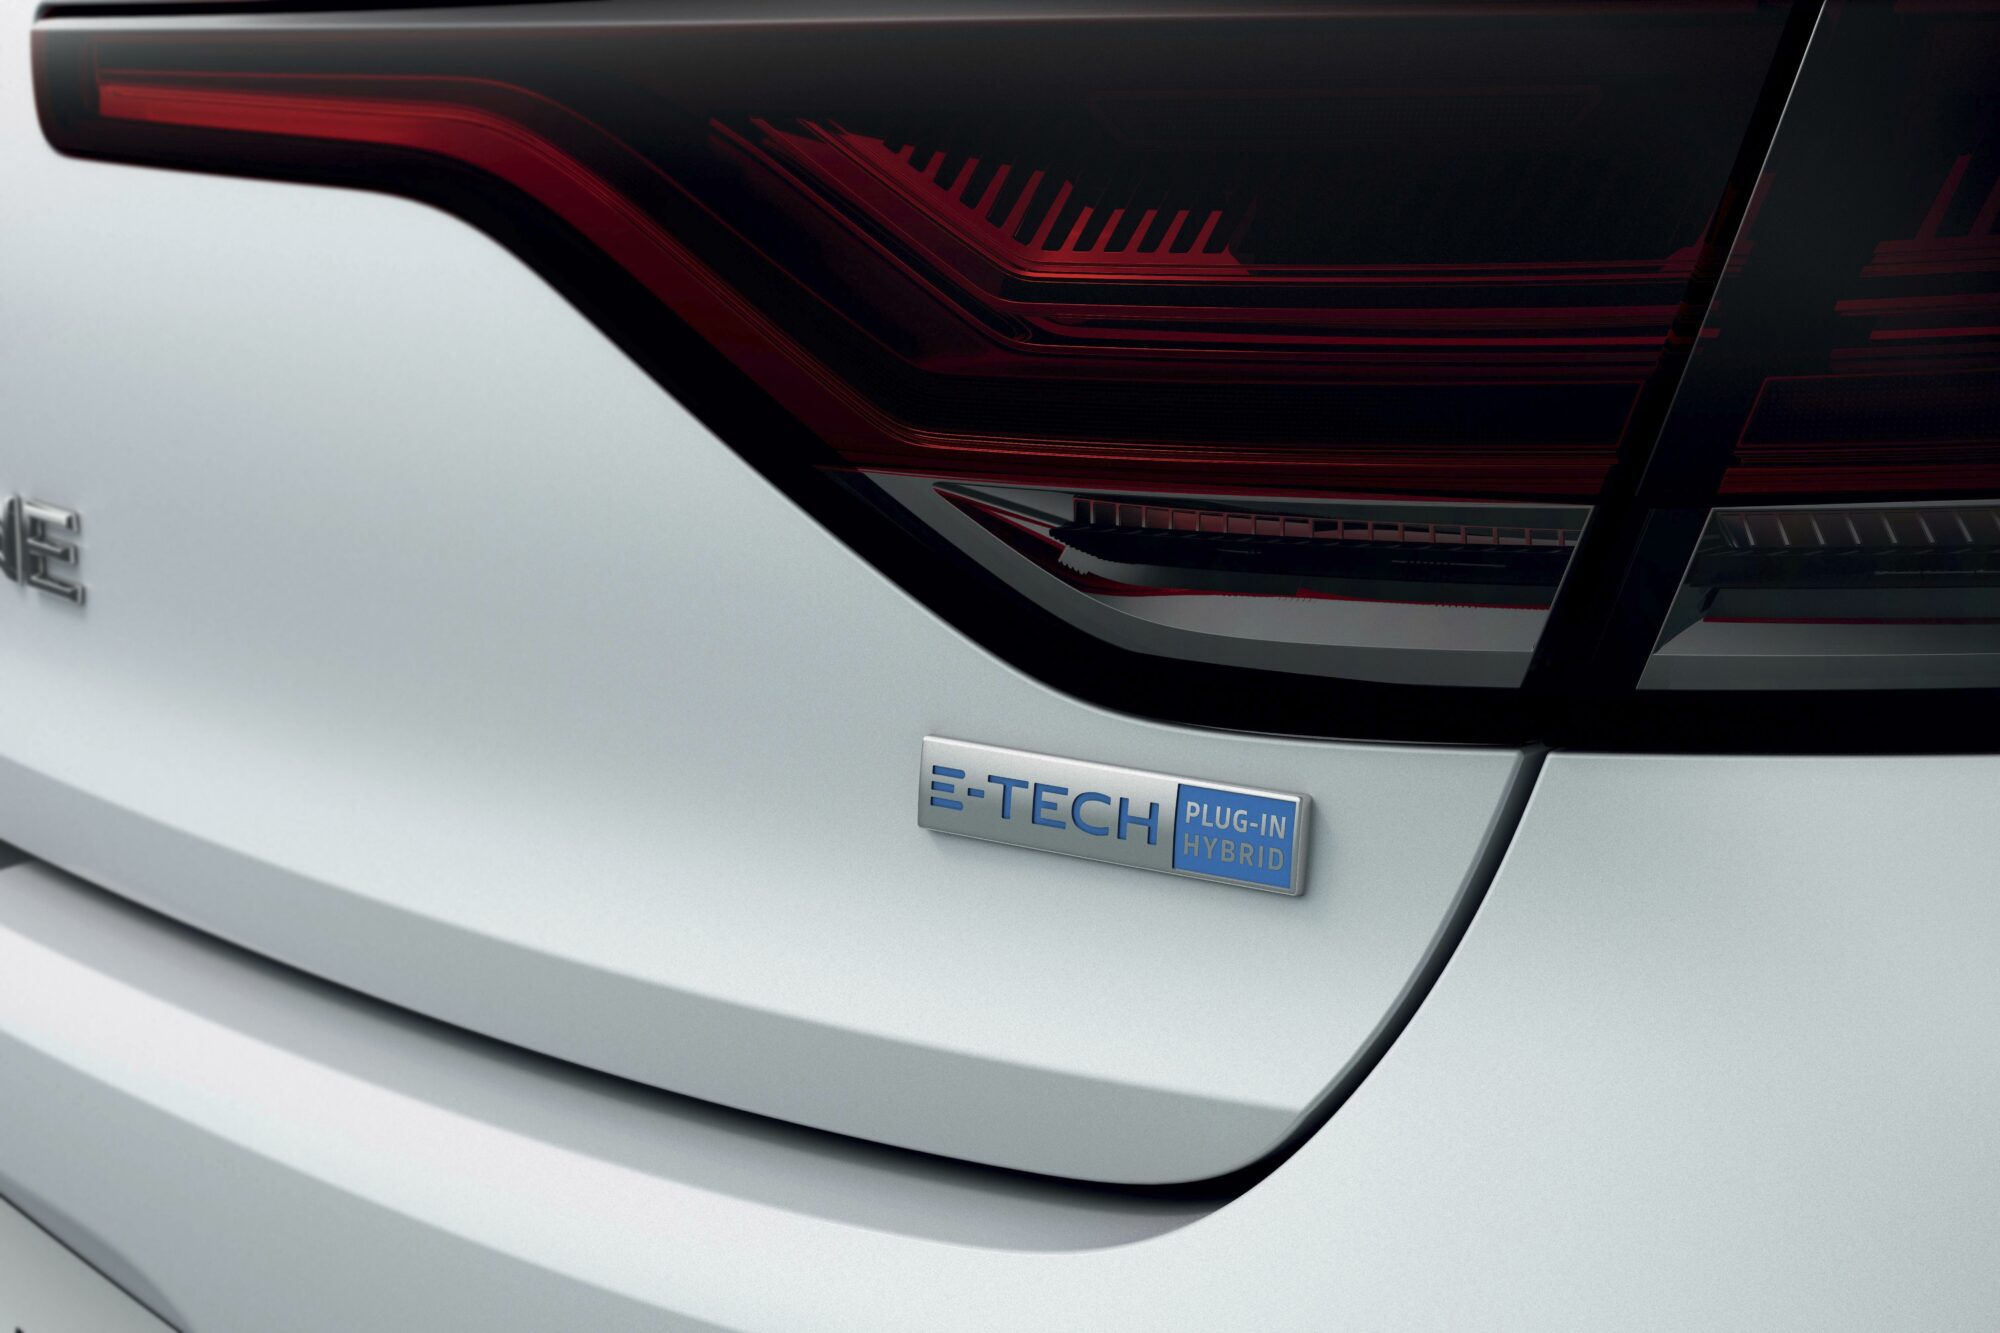 2020 - Nouvelle Renault MEGANE E-TECH Plug-in.jpeg